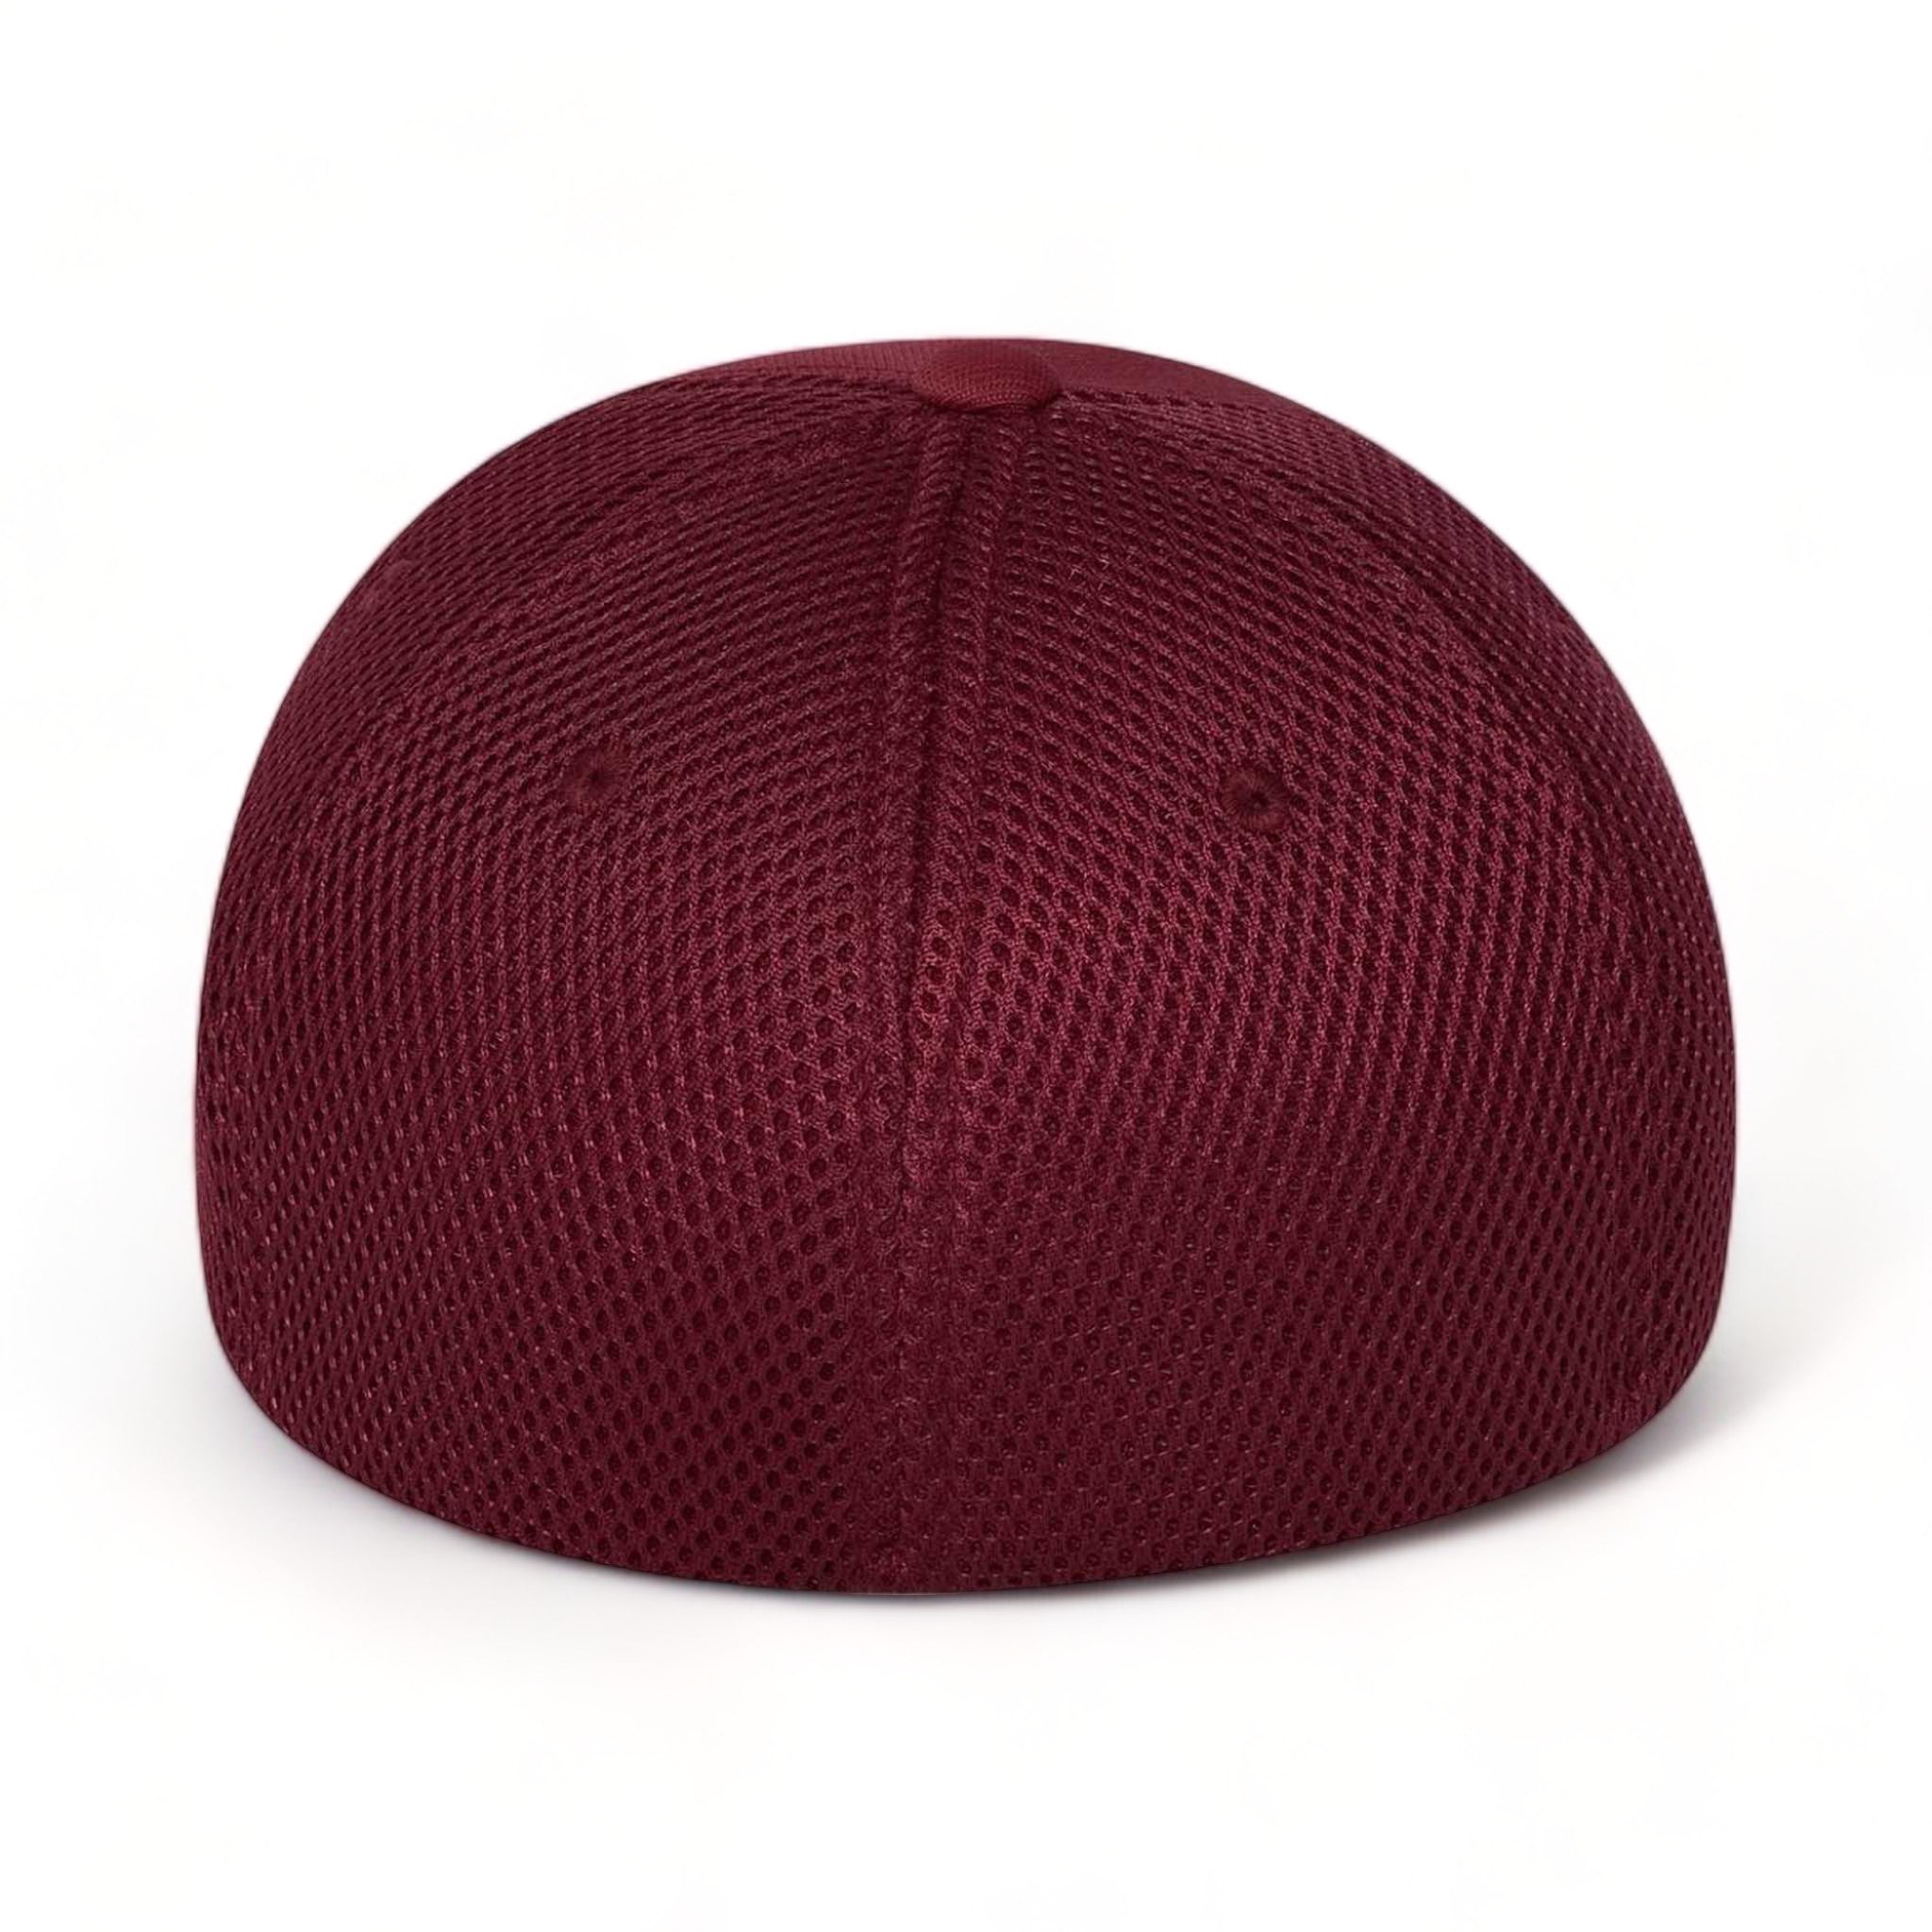 Back view of Flexfit 6533 custom hat in maroon